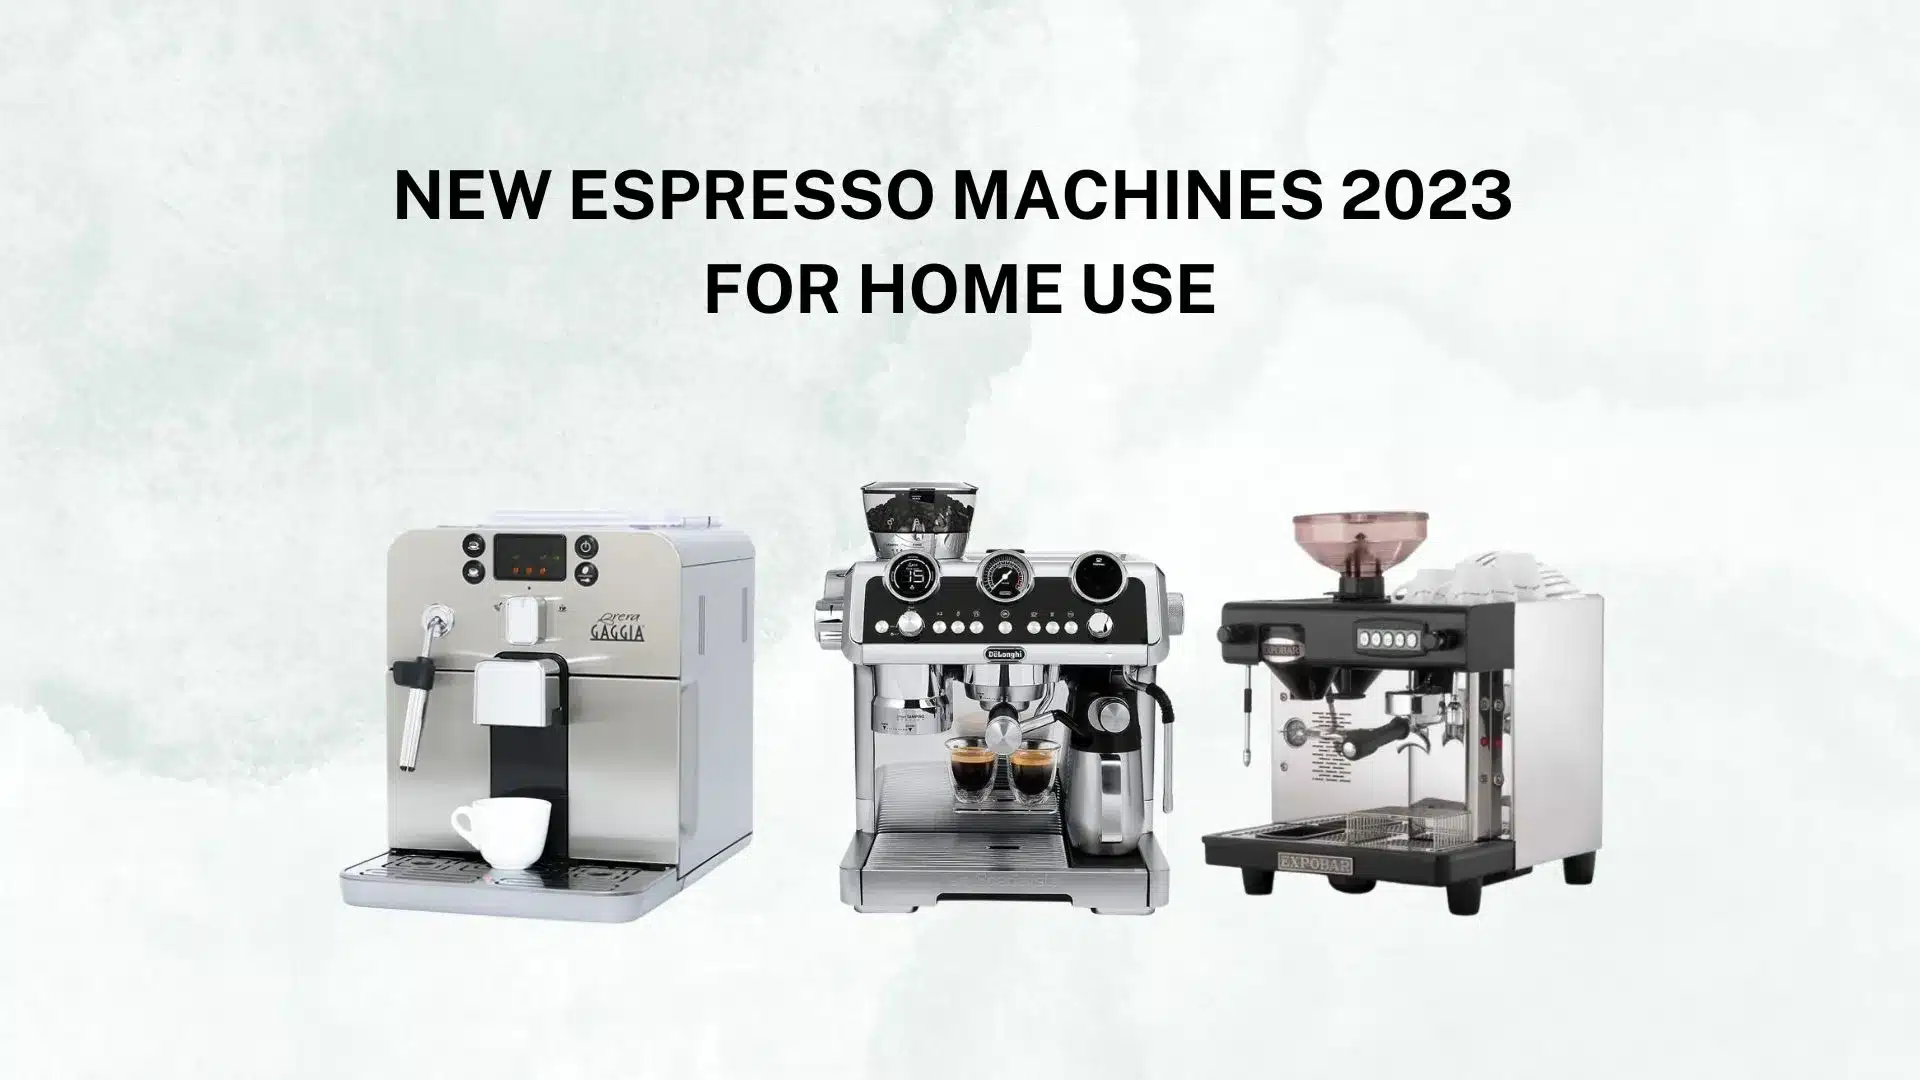 New espresso machines 2023 for home use